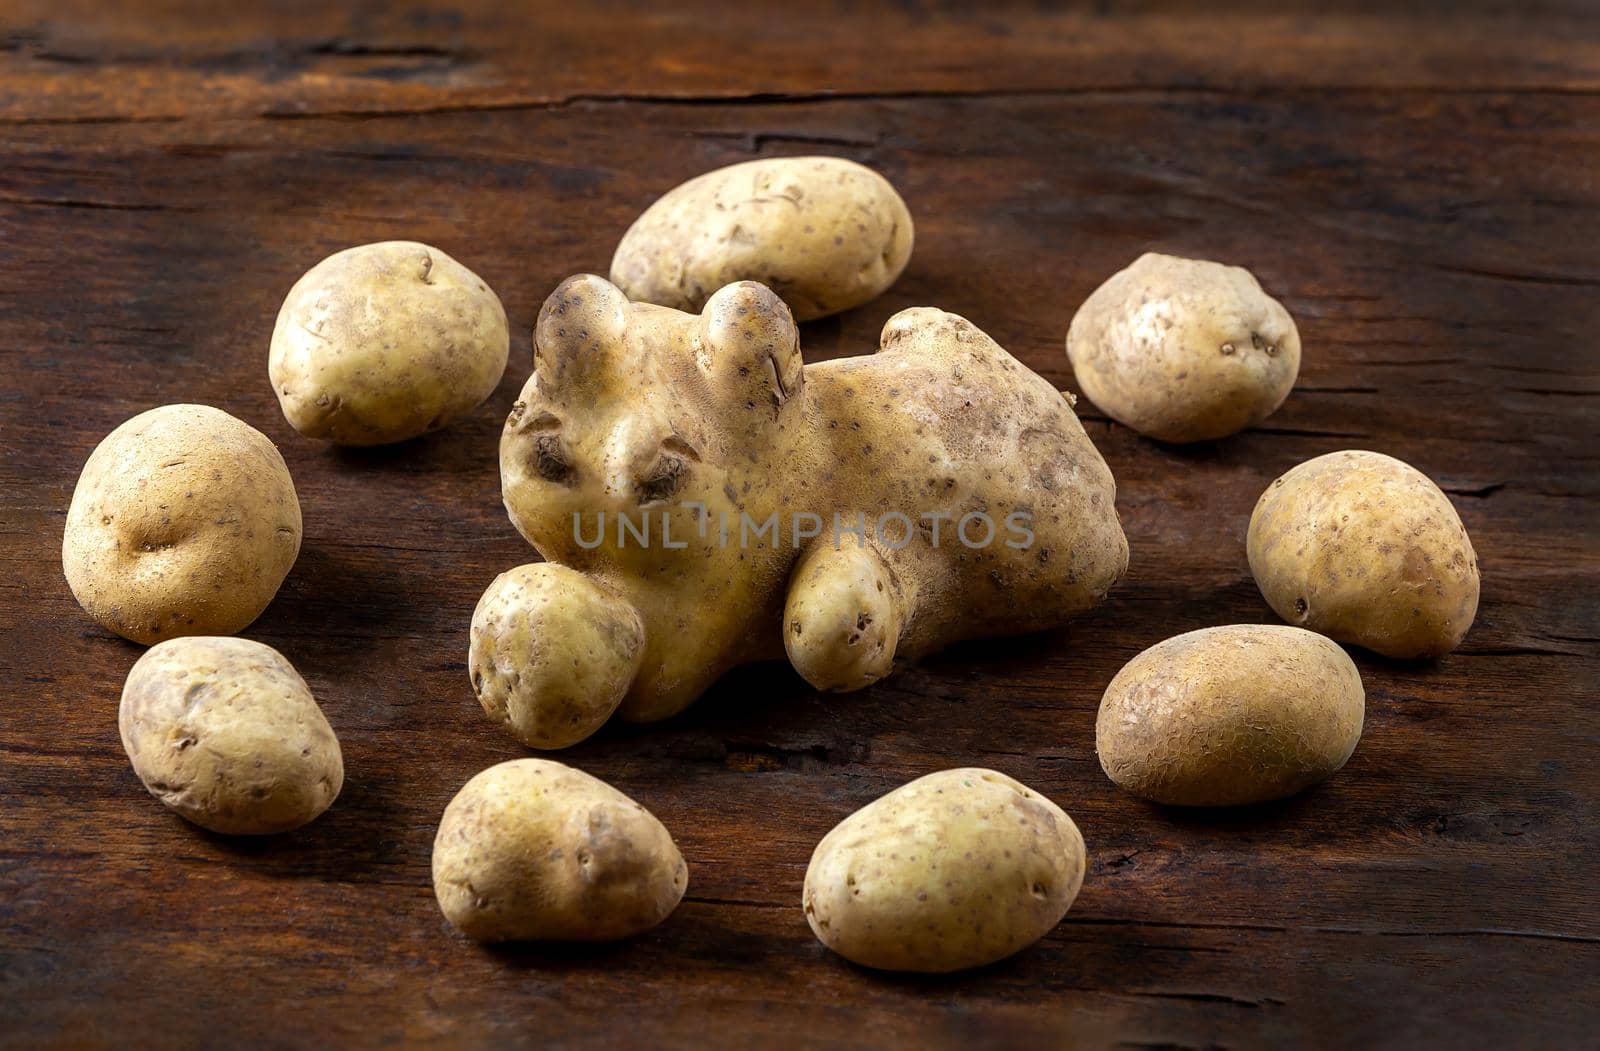 Potatoes forming a round around an extraordinary specimen